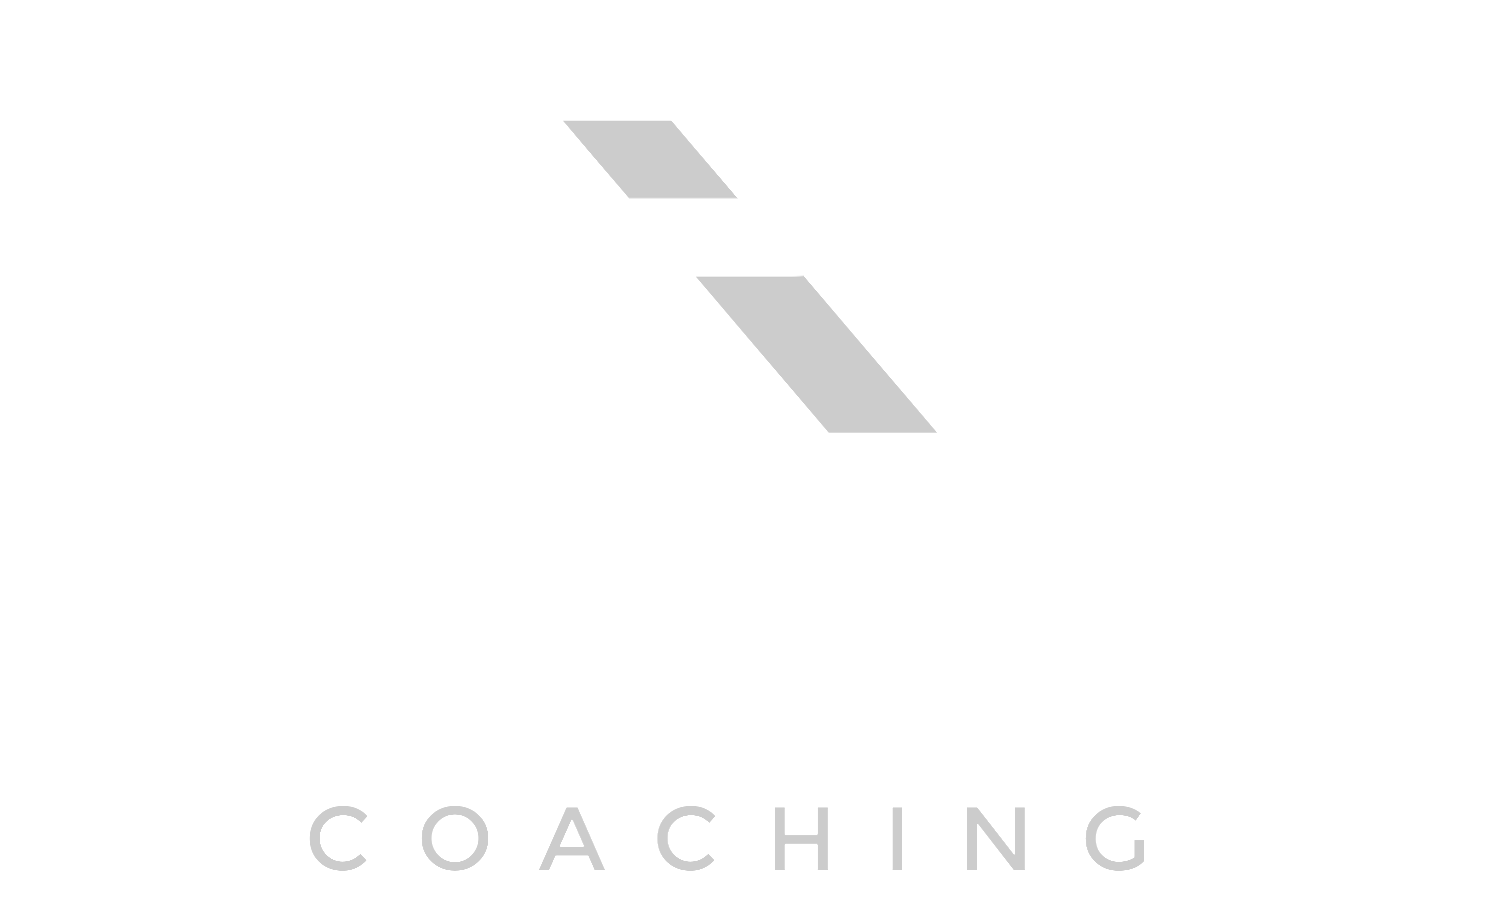 Rinehart Co. Coaching